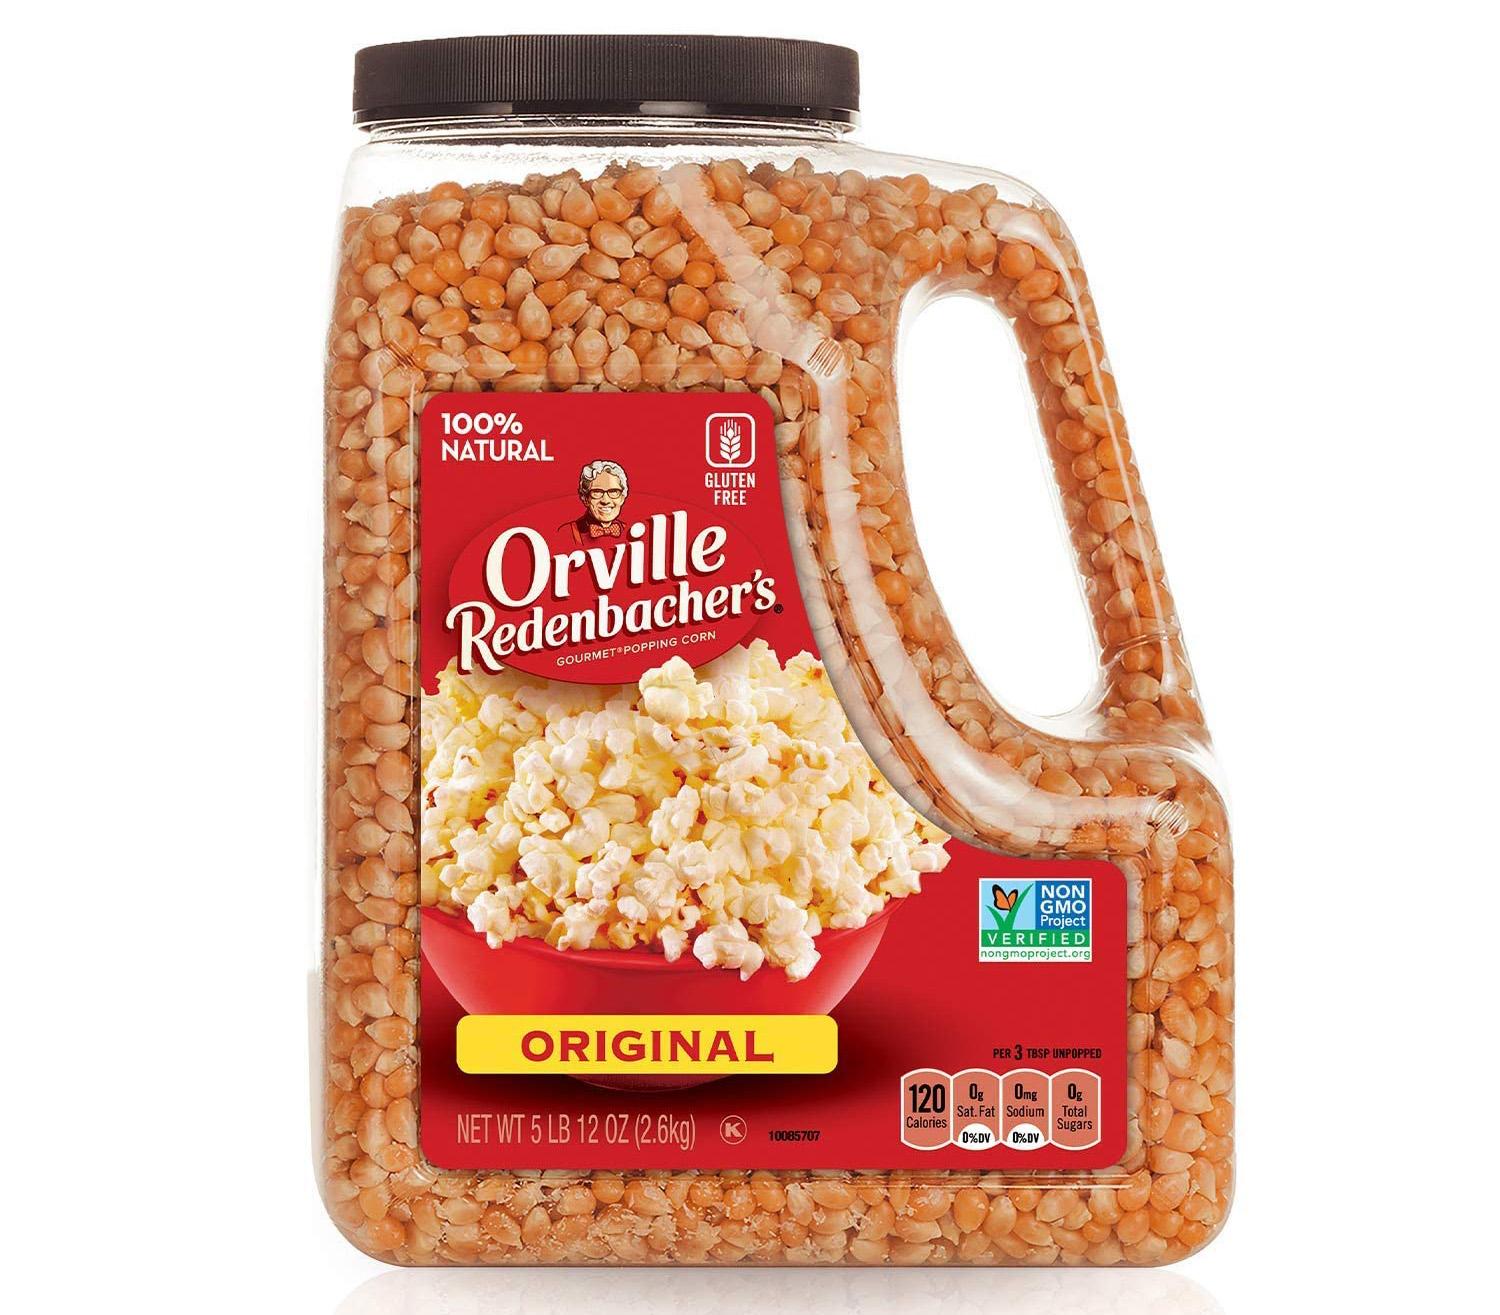 Orville Redenbachers Original Gourmet Yellow Popcorn Kernels 5Lbs for $10.60 Shipped